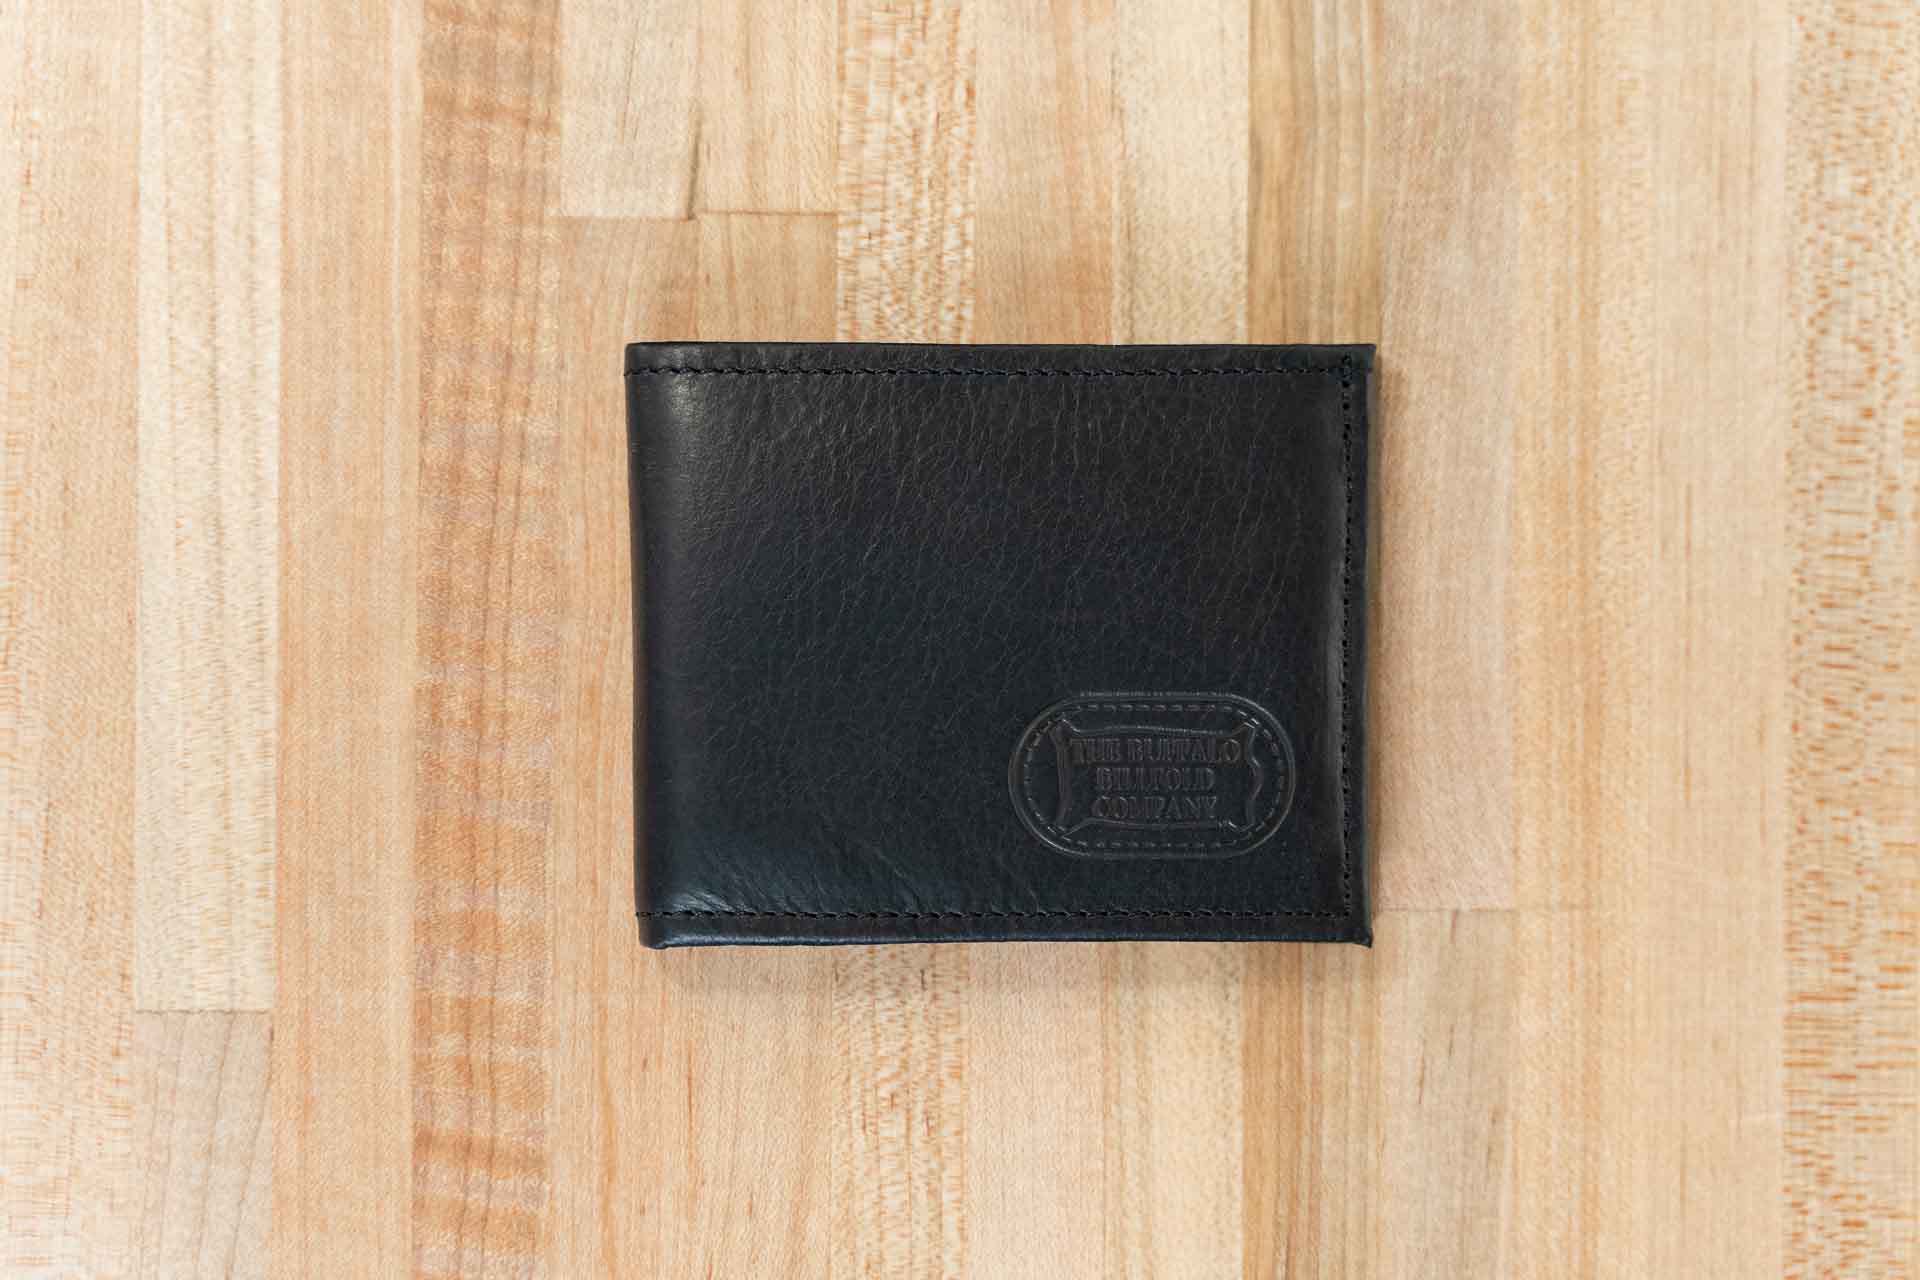 https://buffalobillfoldcompany.com/wp-content/uploads/2012/12/mens-bifold-leather-wallet-black-front.jpg